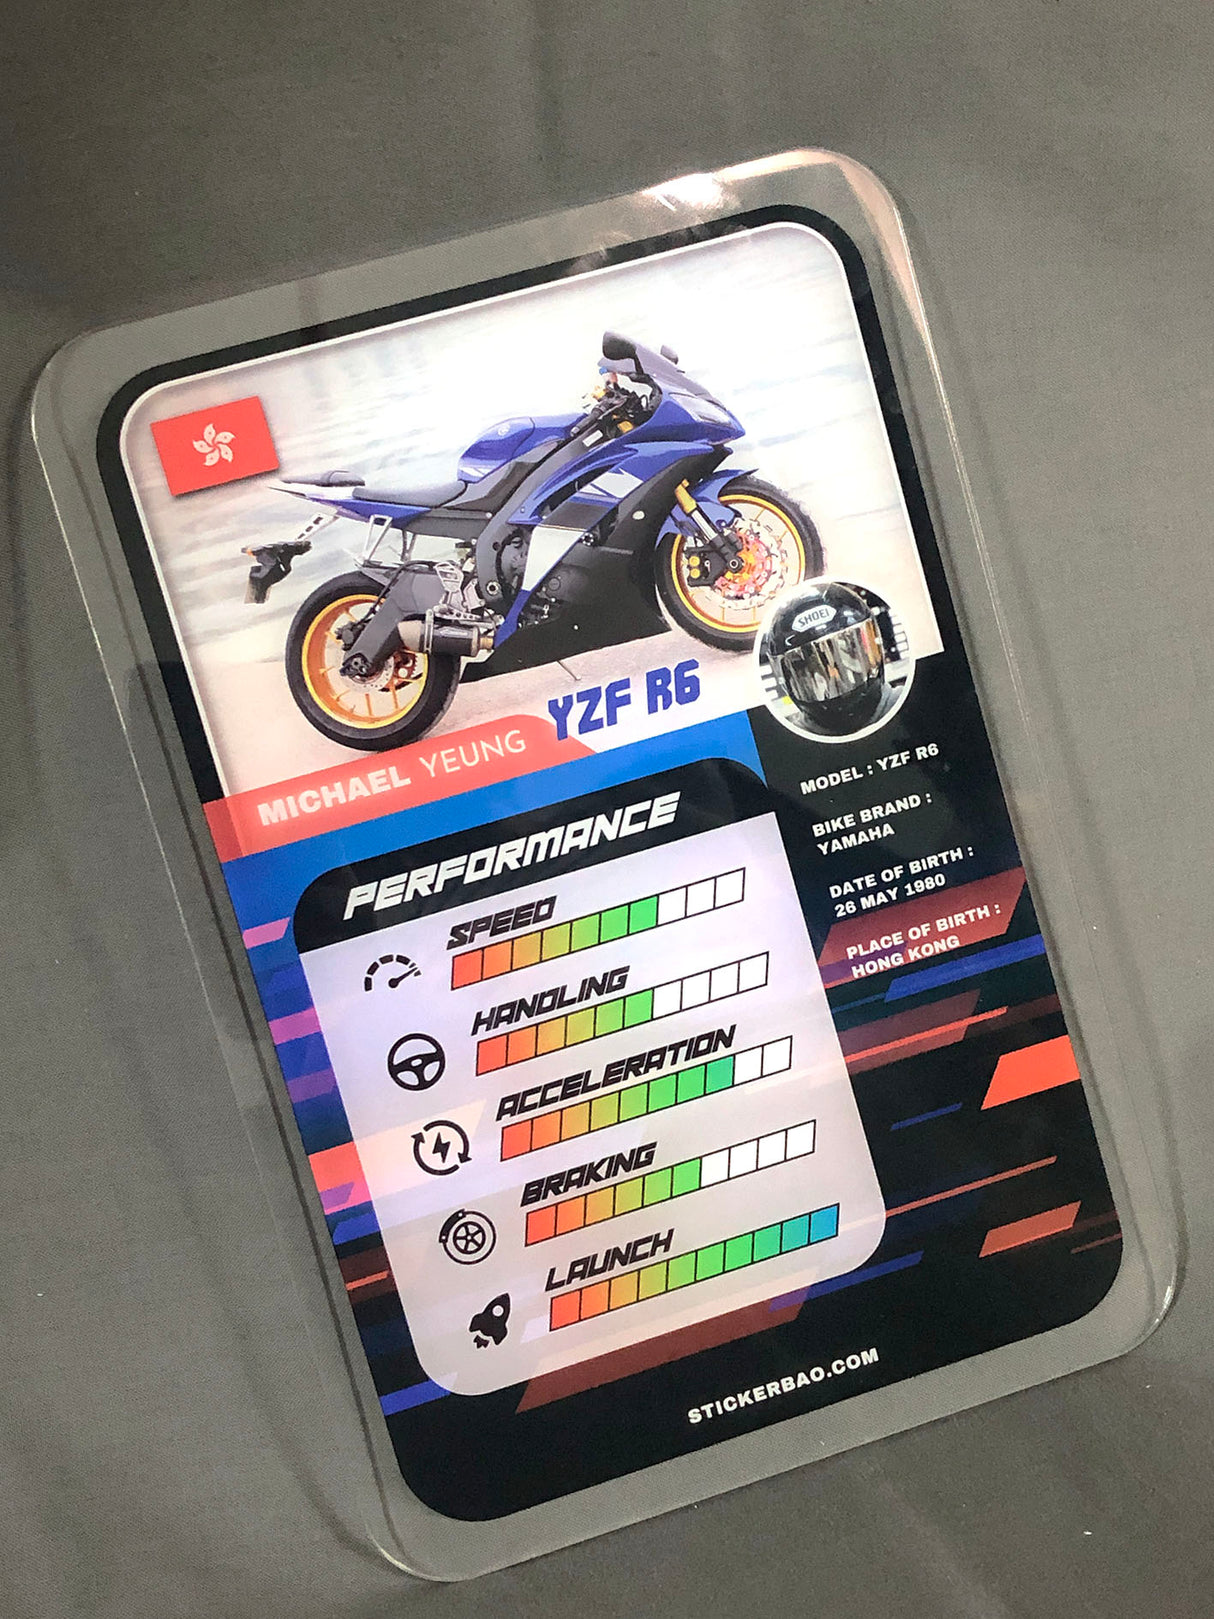 Motorcycle Race Rider Display Decorative Sign Board - StickerBao Wheel Sticker Store